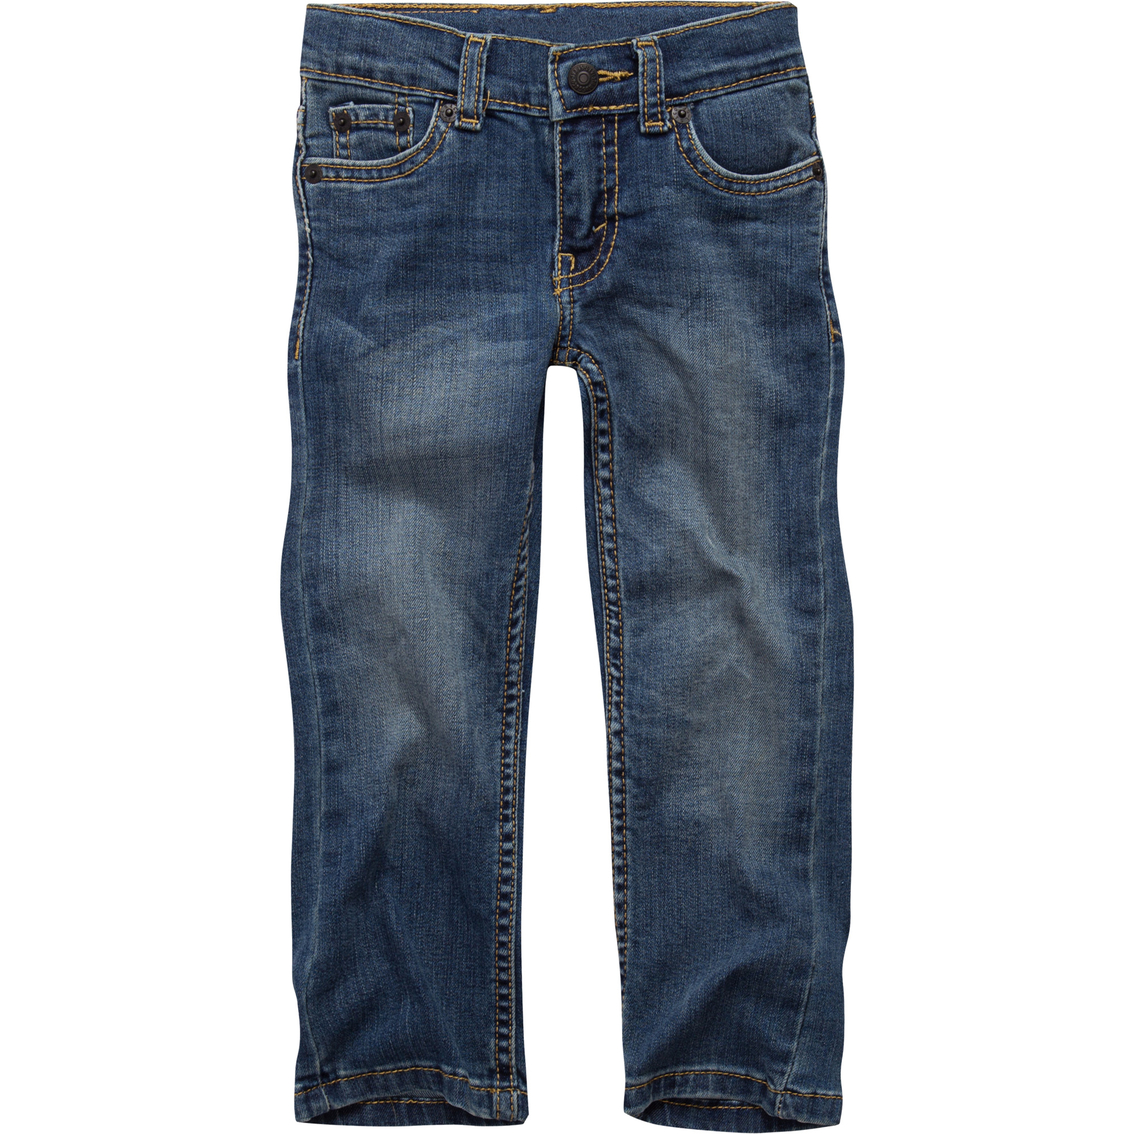 Levi's Toddler Boys 511 Performance Slim Fit Jeans | Toddler Boys 2t-4t ...